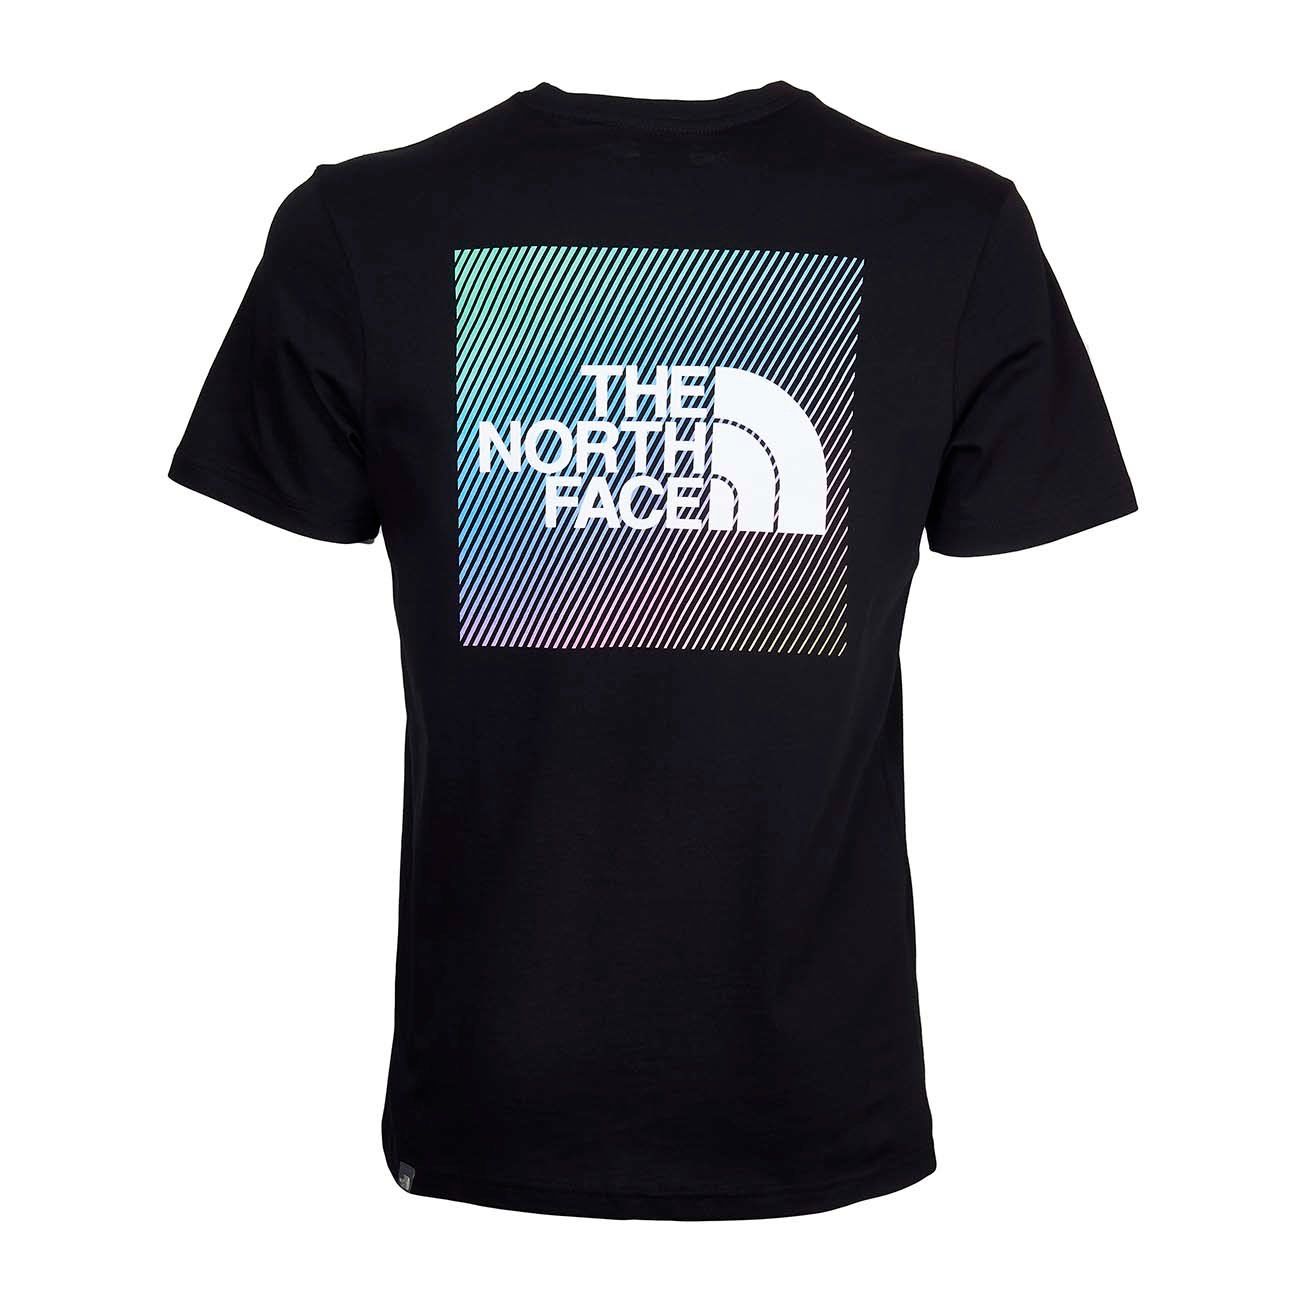 north face rainbow shirt